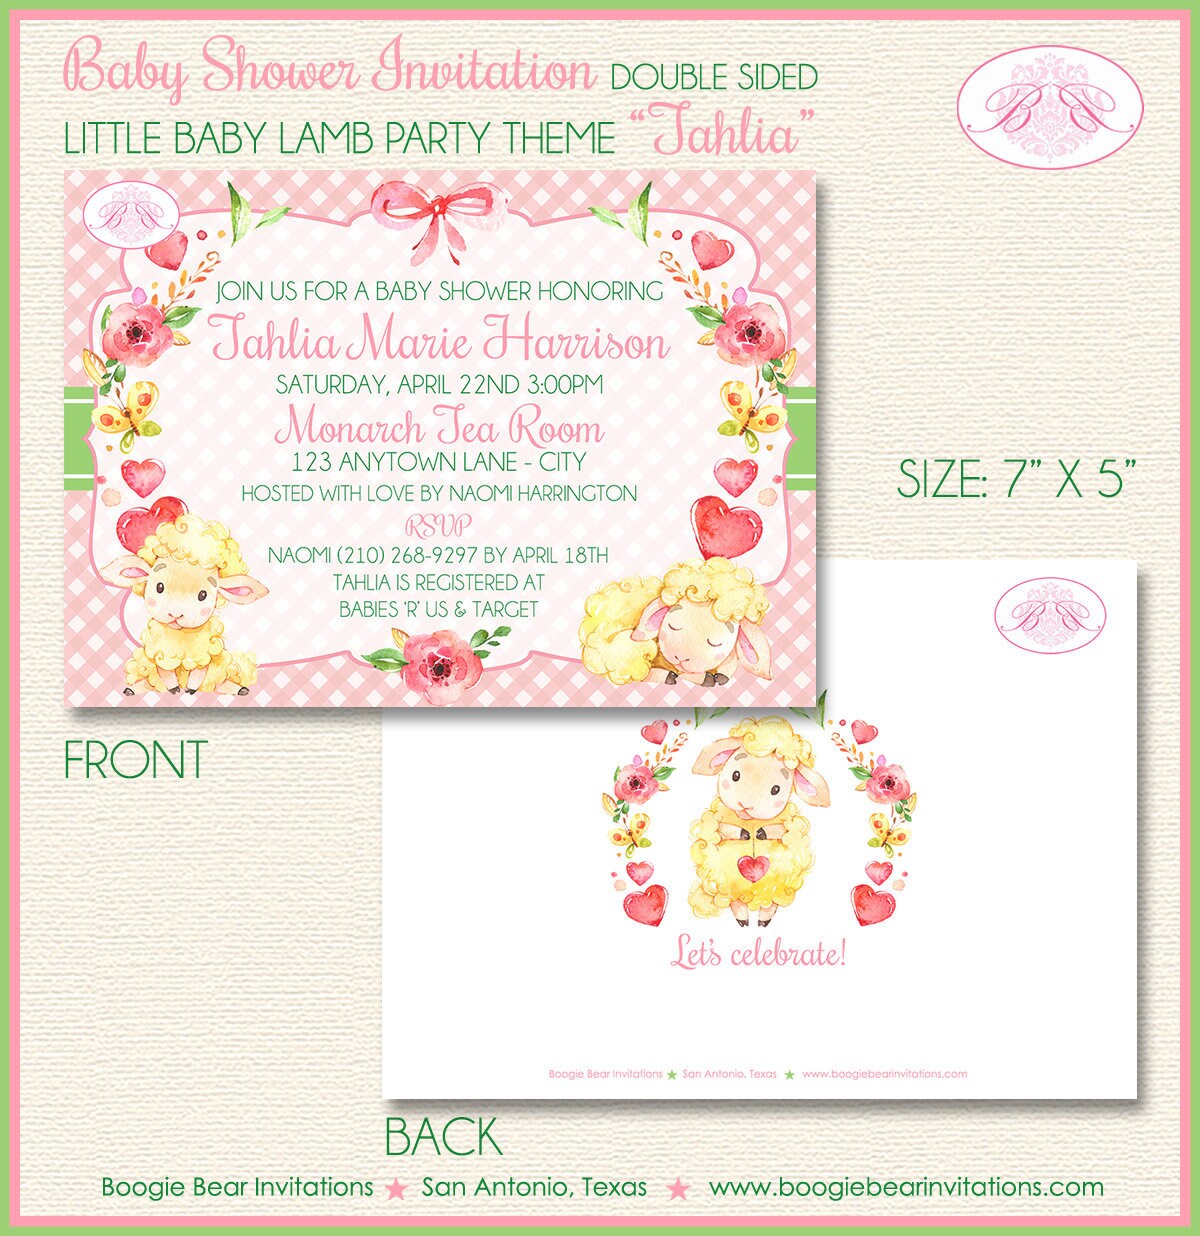 Little Lamb Baby Shower Invitation Farm Animals Pink Sheep Flower Girl Bow Boogie Bear Invitations Tahlia Theme Paperless Printable Printed